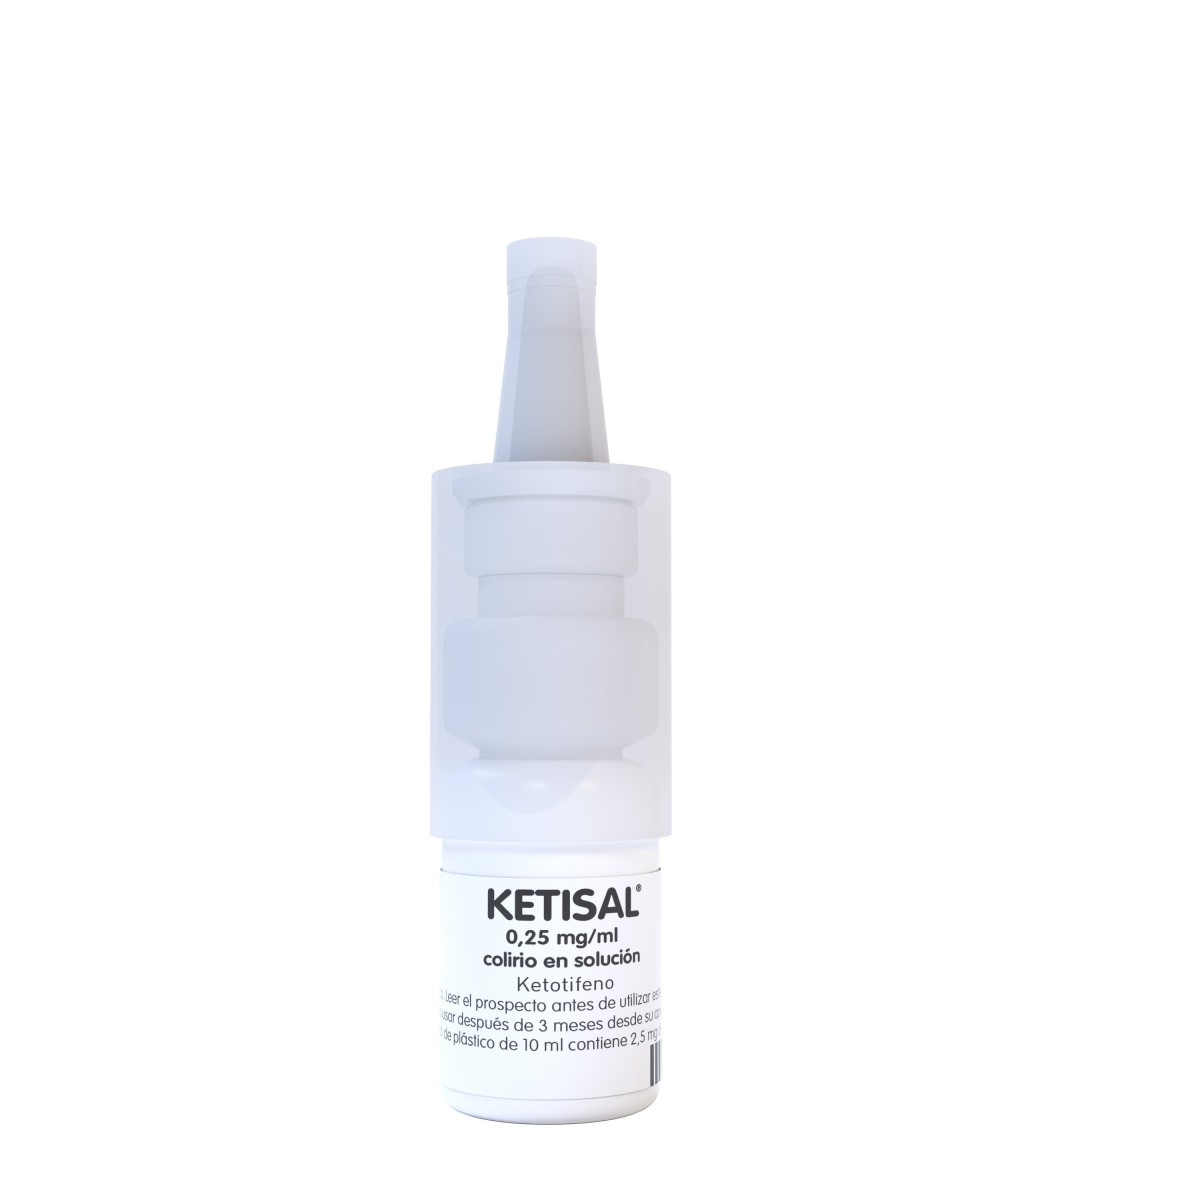 KETISAL 0,25 MG/ML COLIRIO EN SOLUCION, 1 frasco de 10 ml fotografía de la forma farmacéutica.